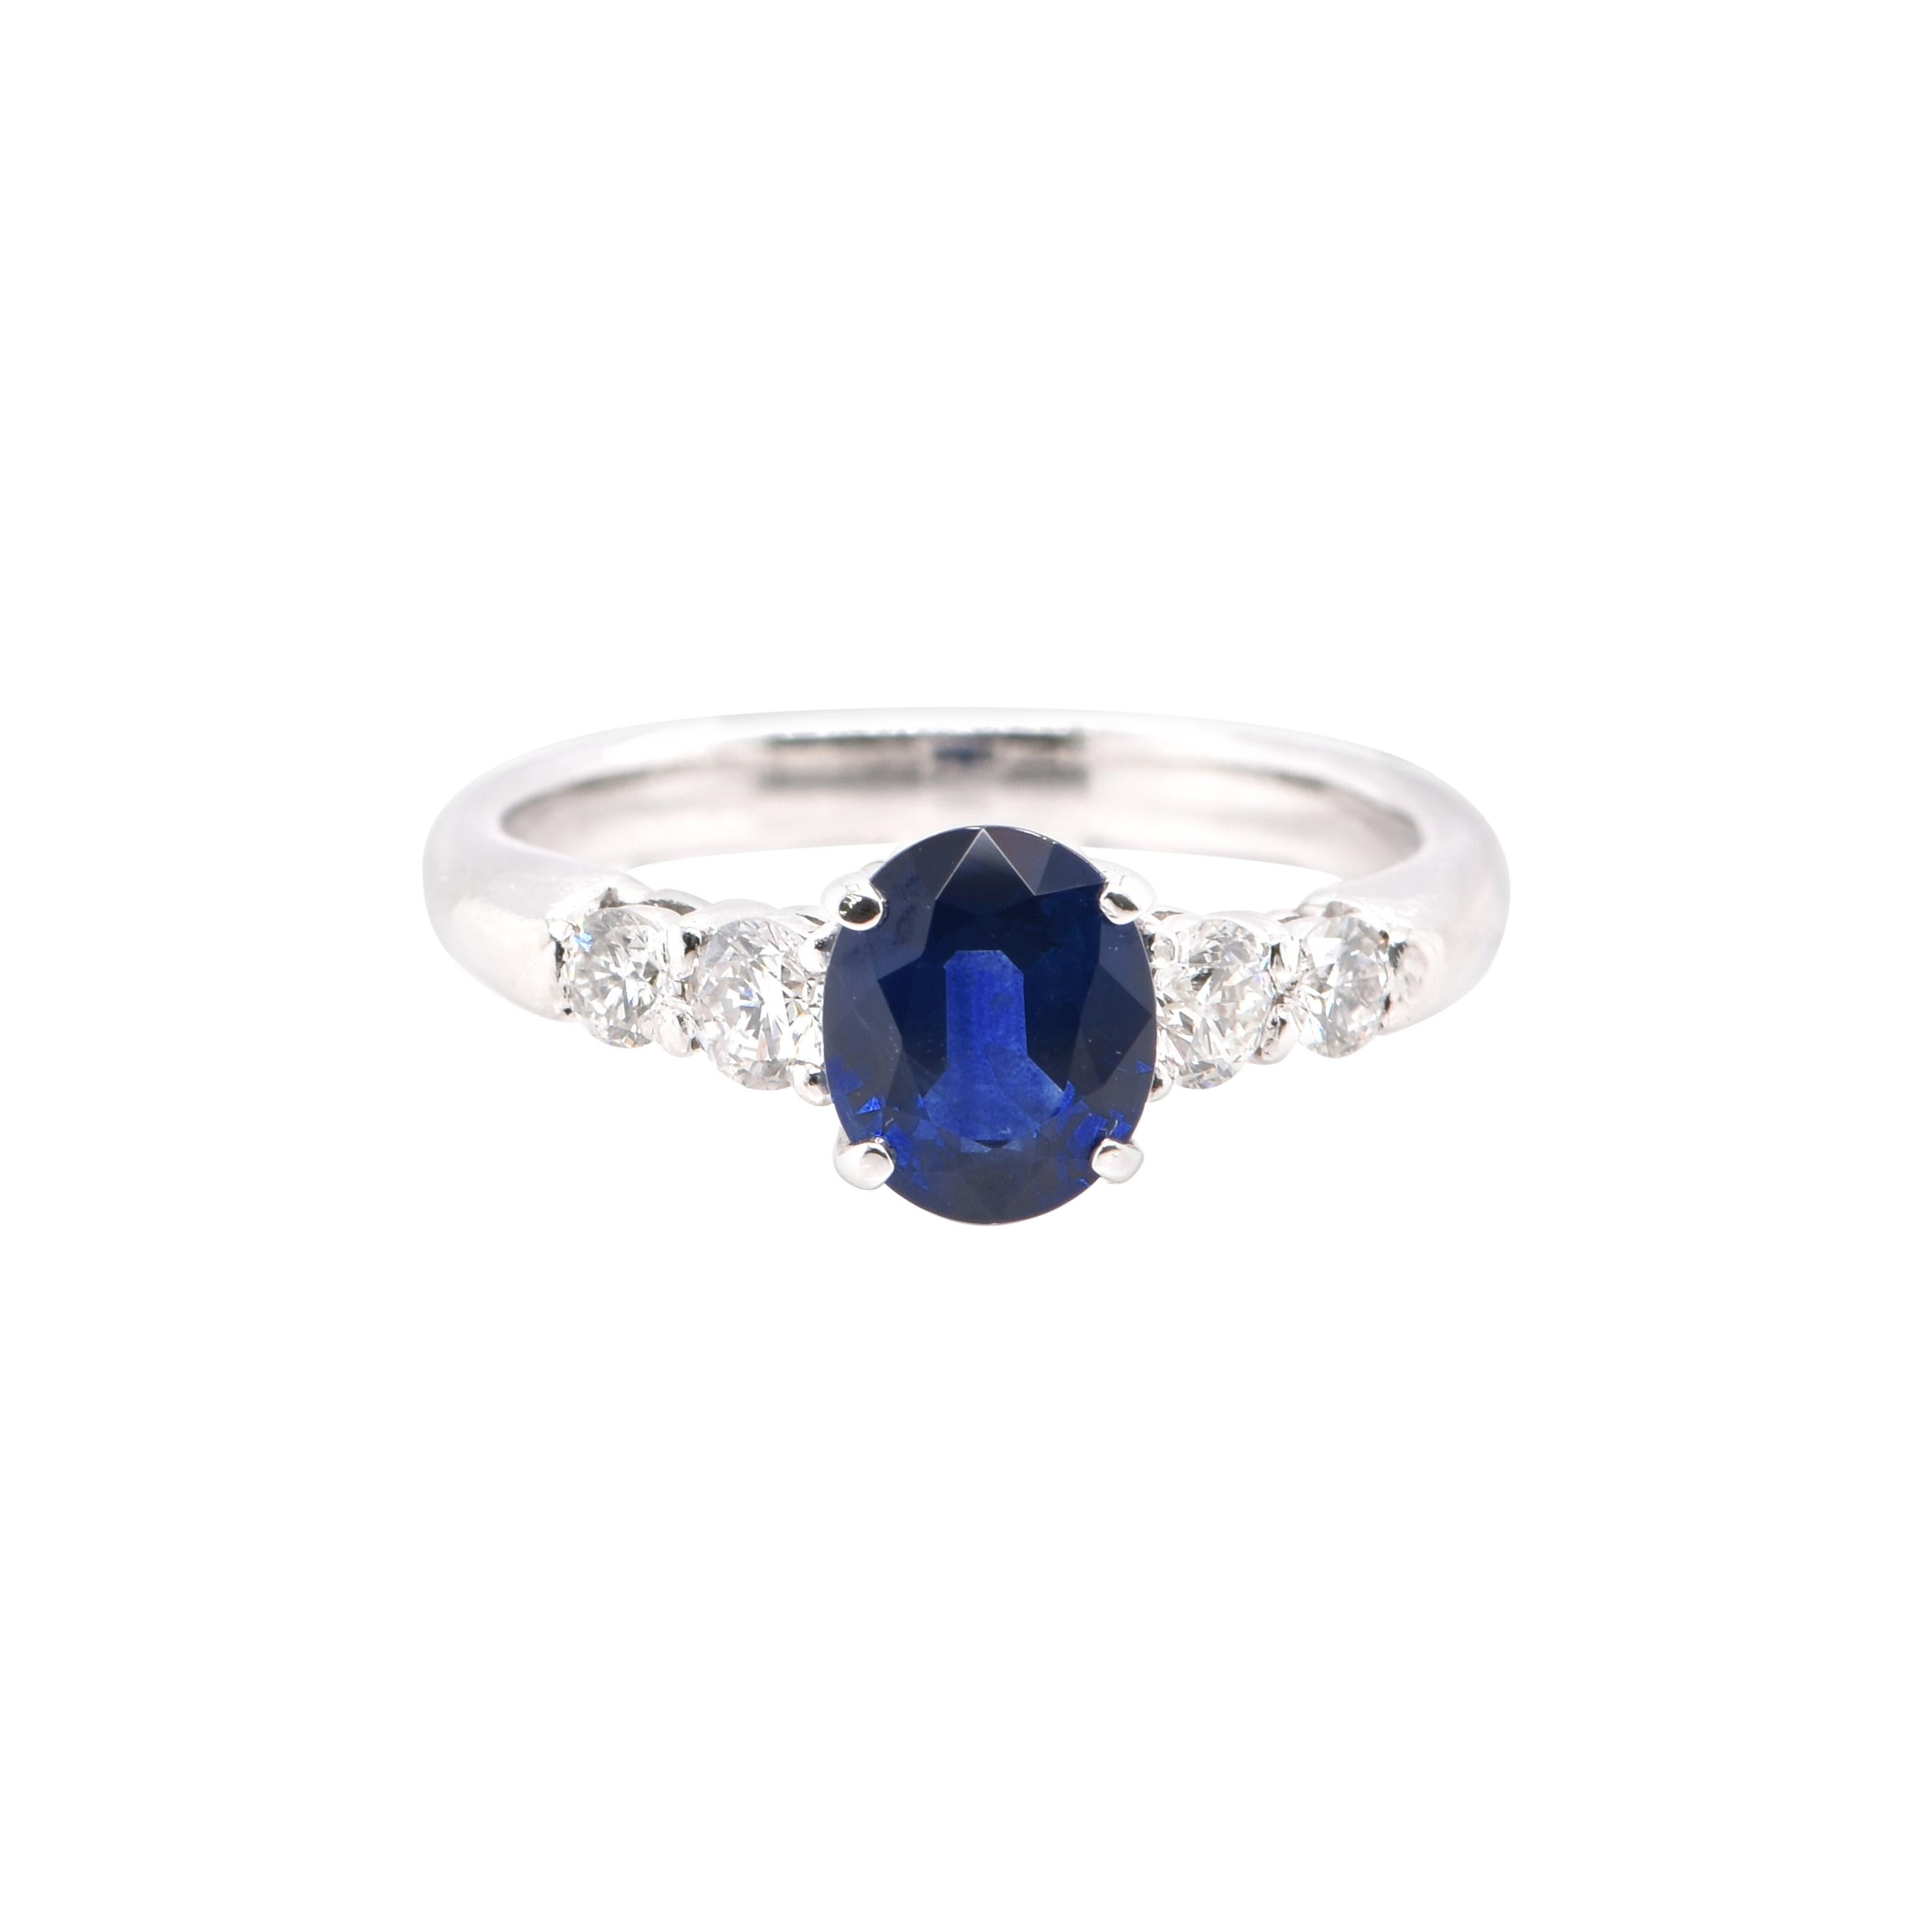 AIGS Certified 1.02 Carat Natural Cornflower Blue Sapphire Ring set in Platinum